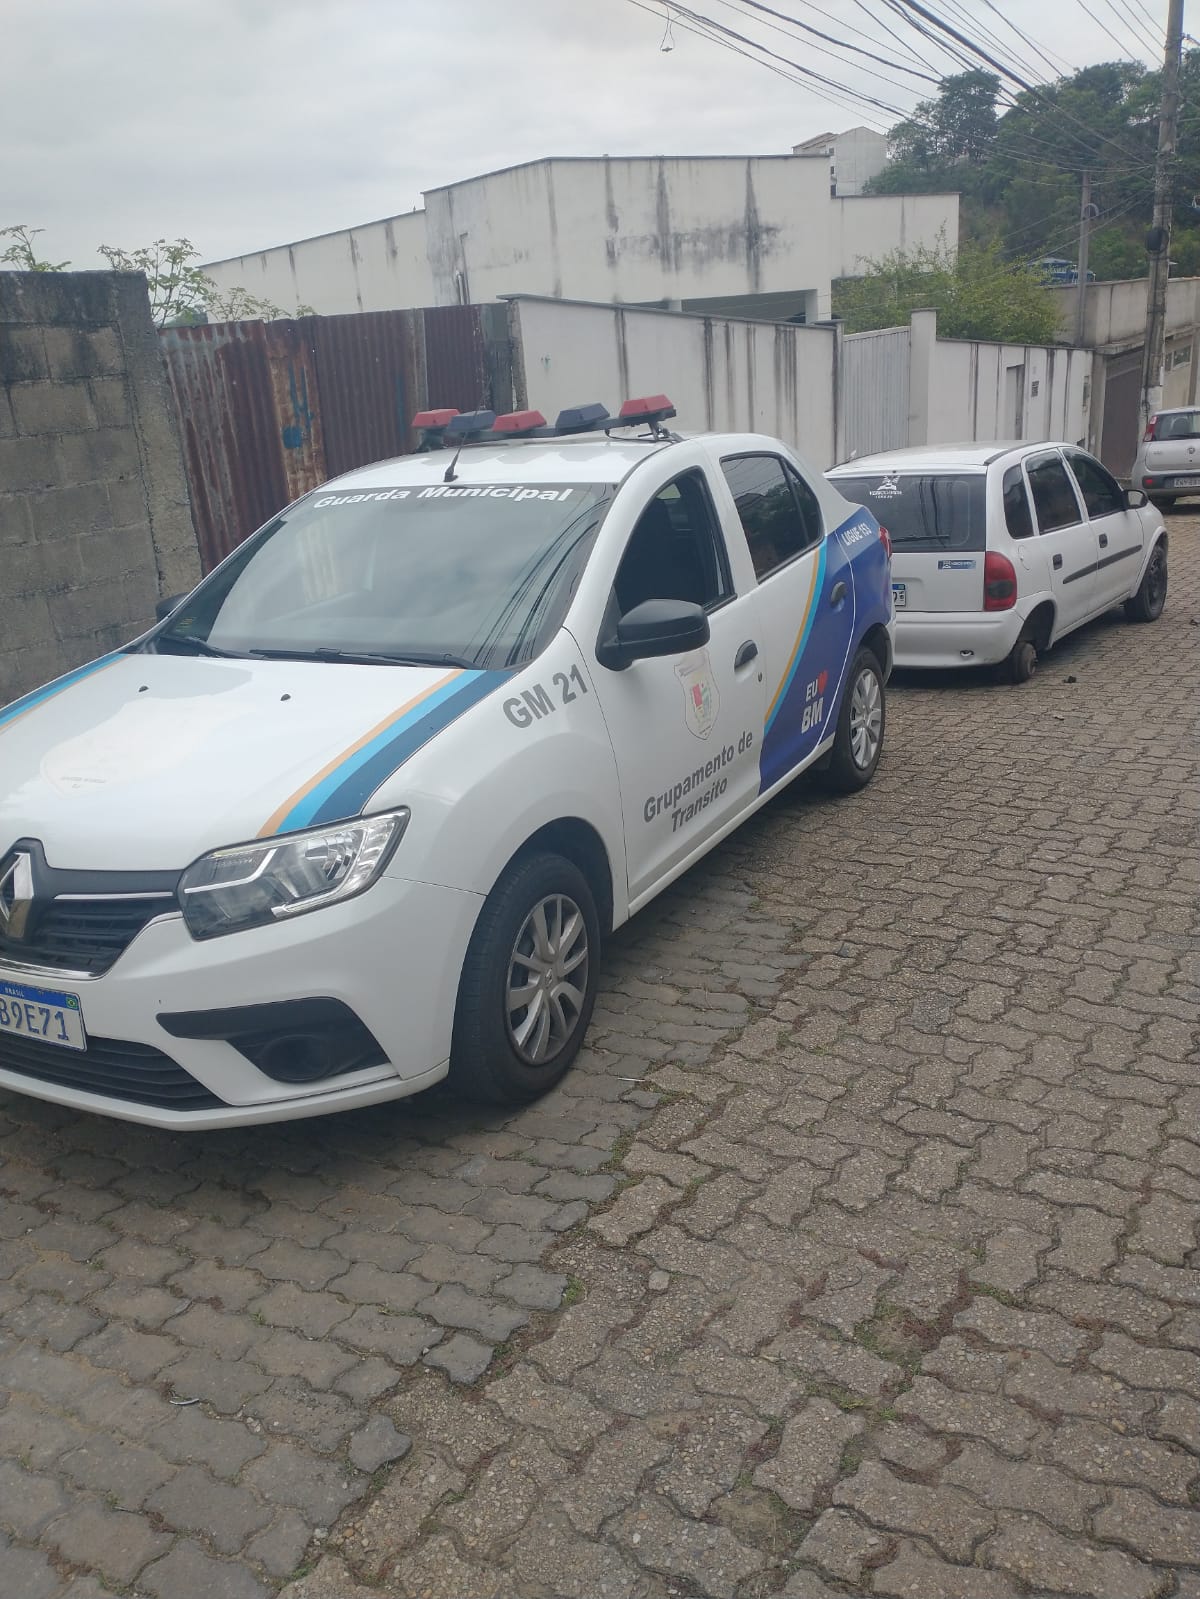 GMBM recupera carro furtado em Volta Redonda